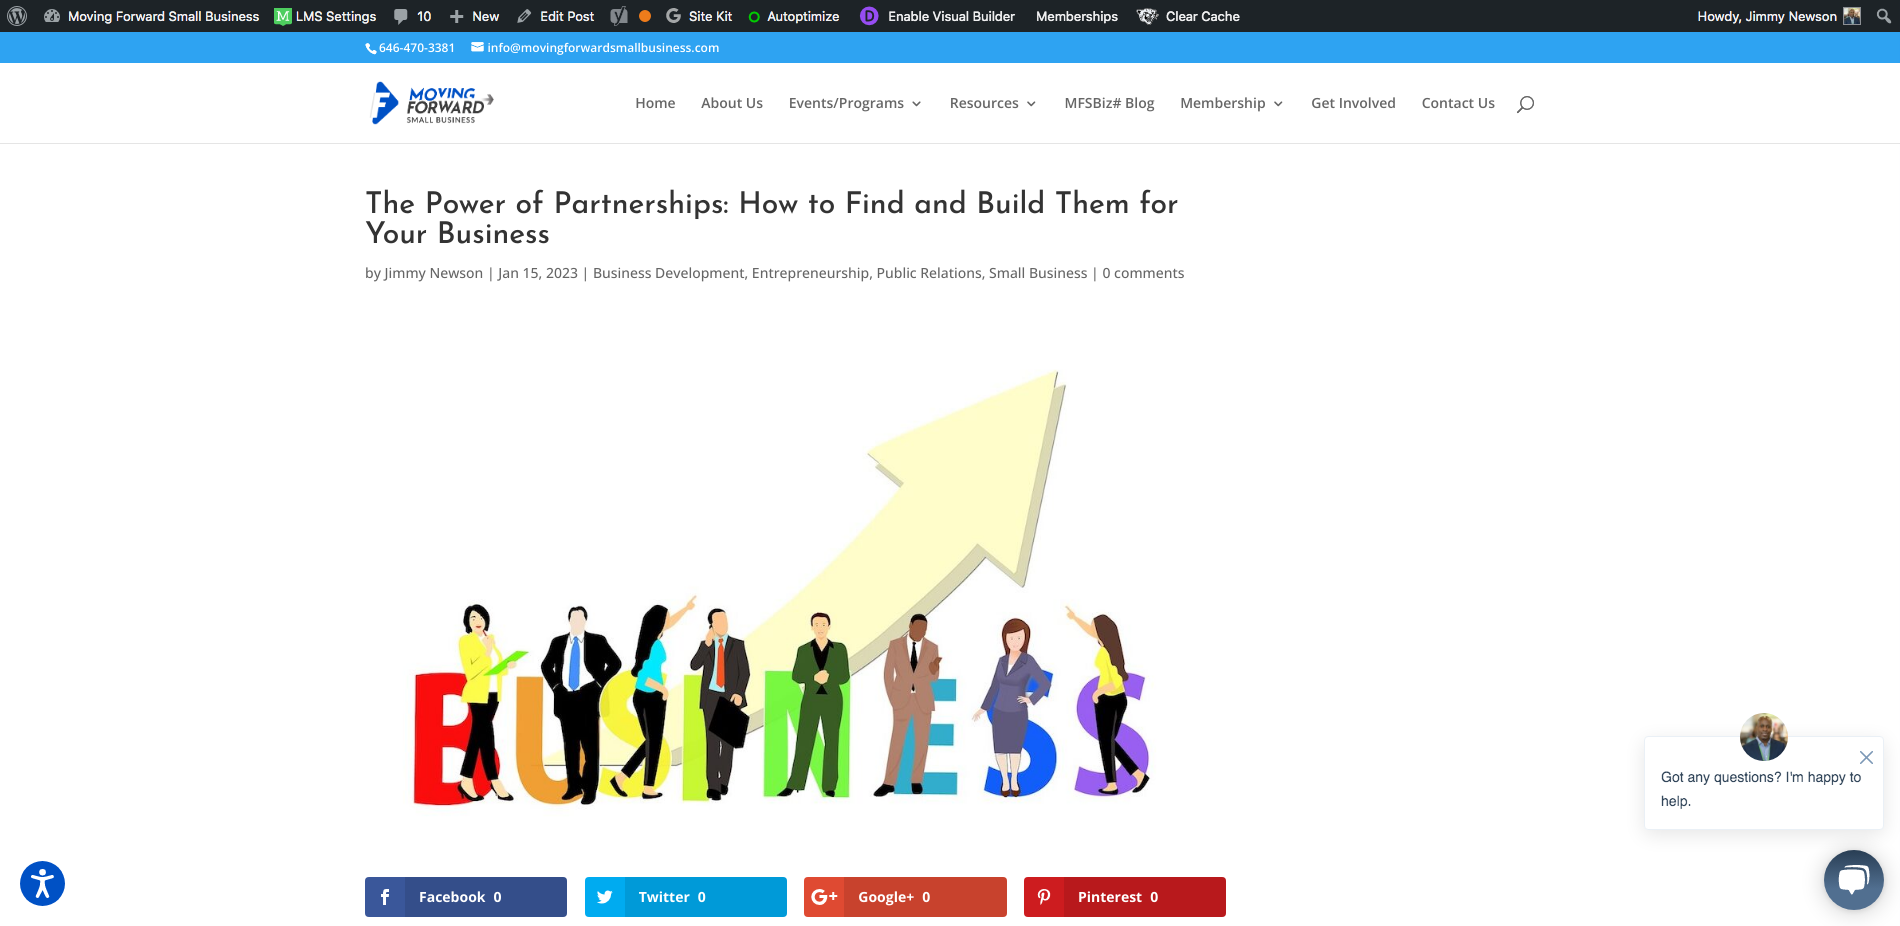 The Power of Partnership Blog